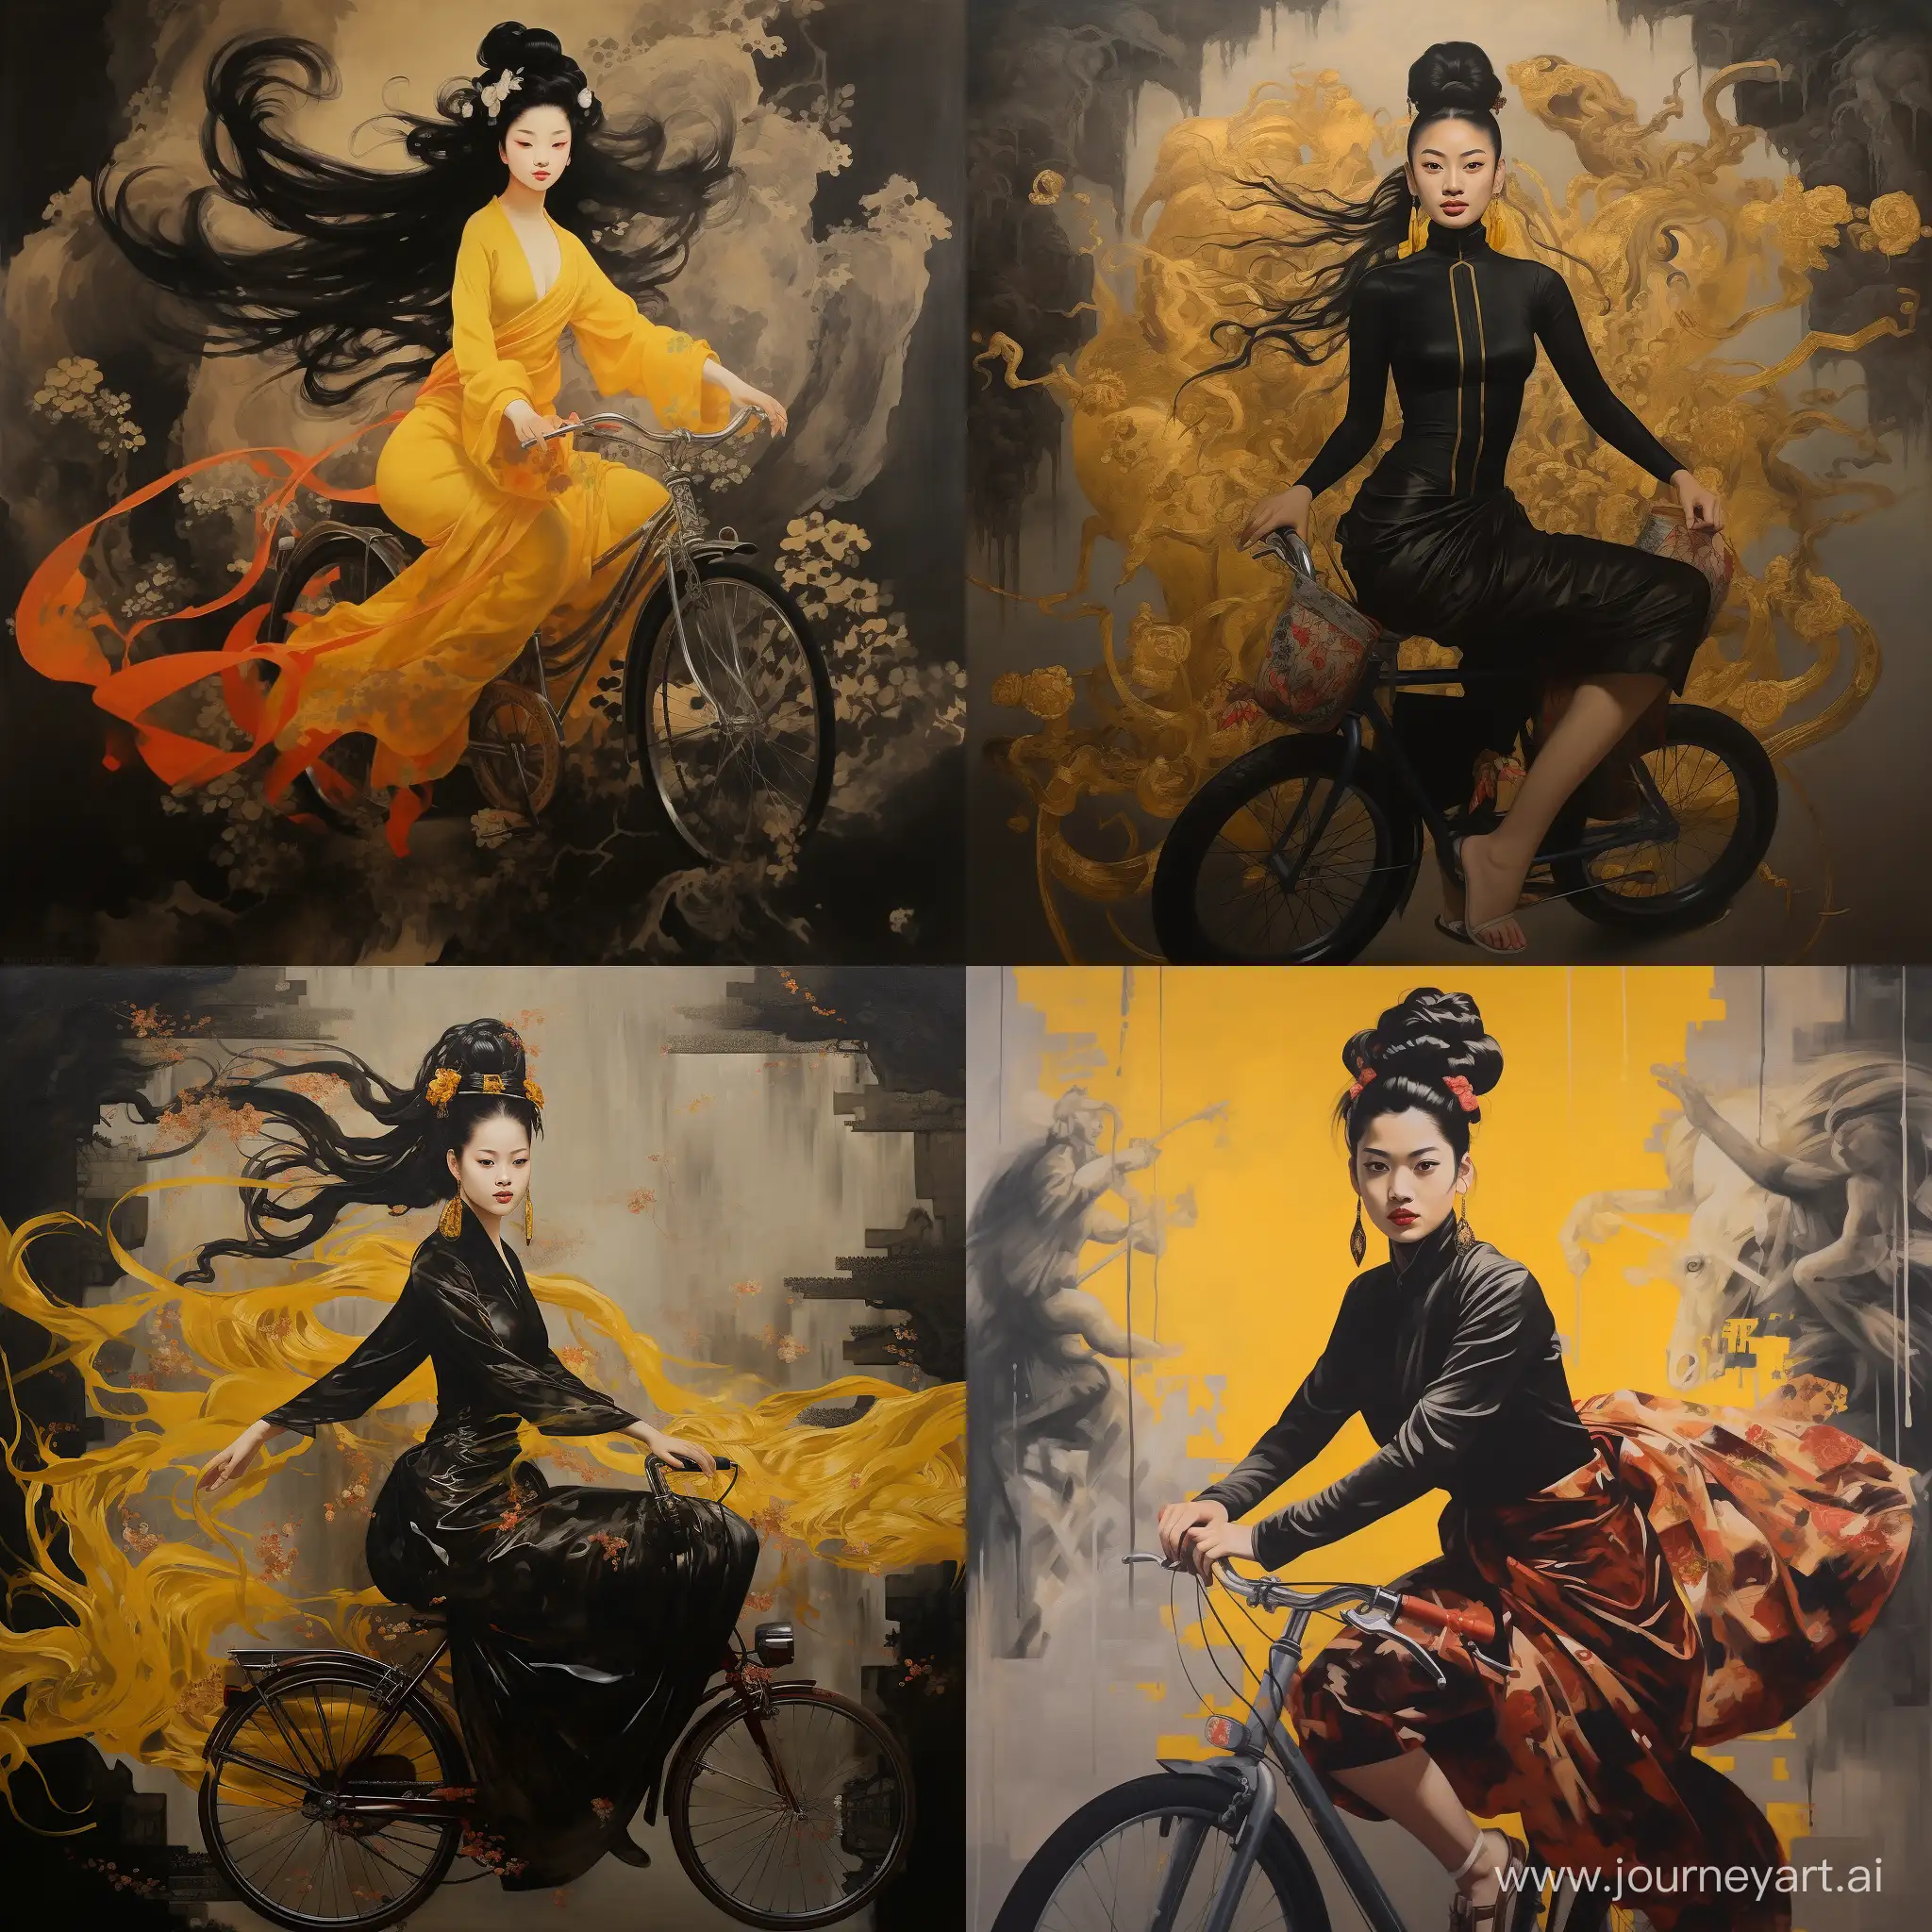 Serene-Black-SilkClad-Beauty-Cycling-Through-Ancient-Painted-Landscape